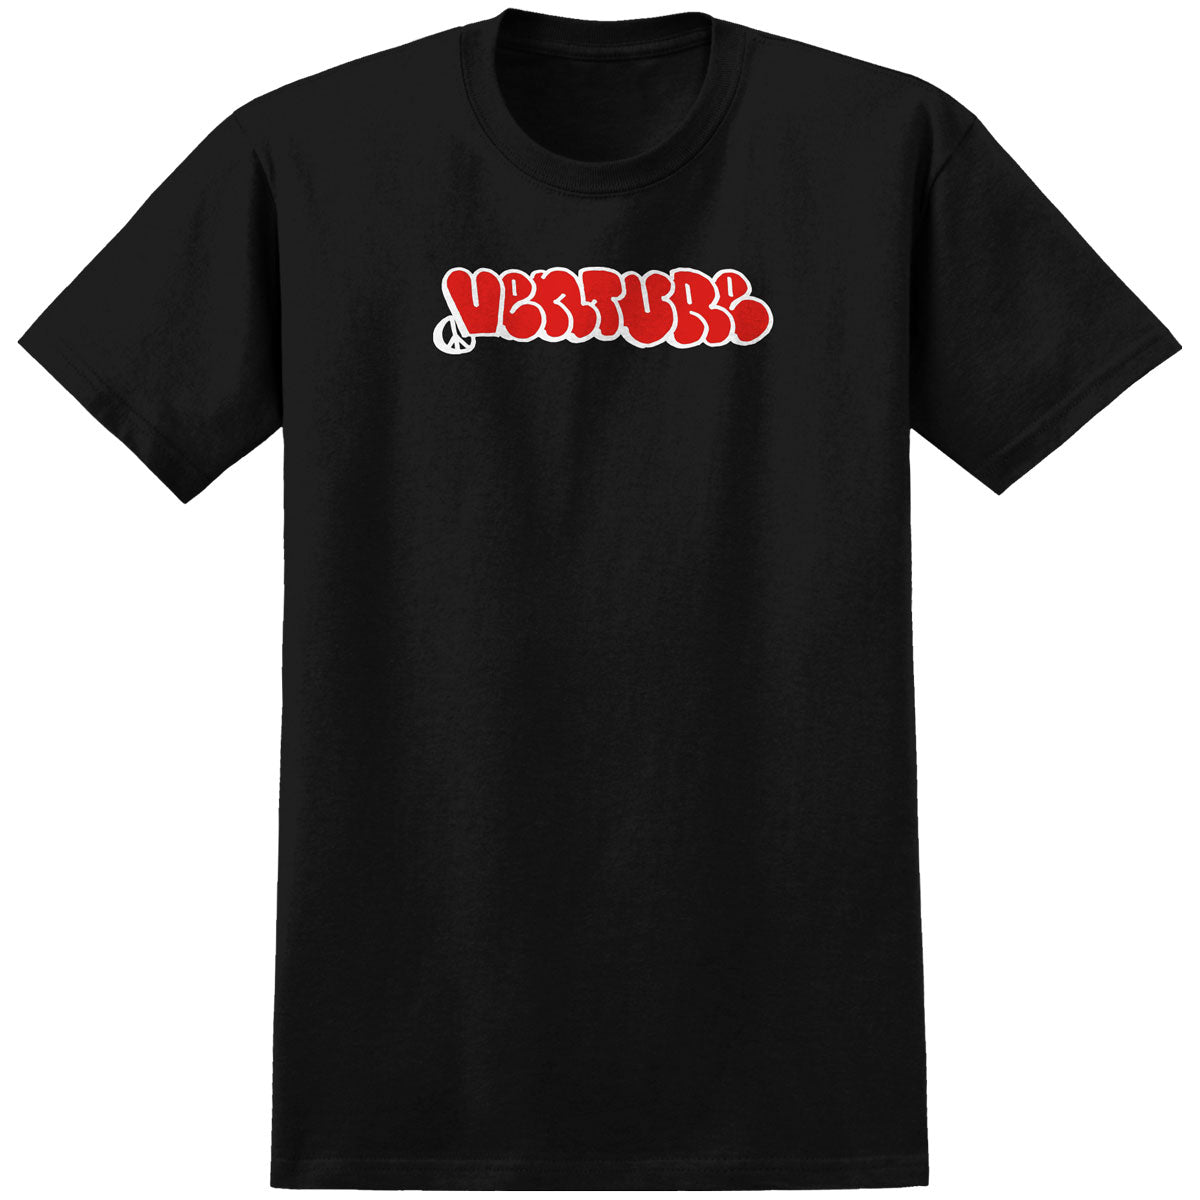 Venture Throw T-Shirt - Black/Red/White image 1